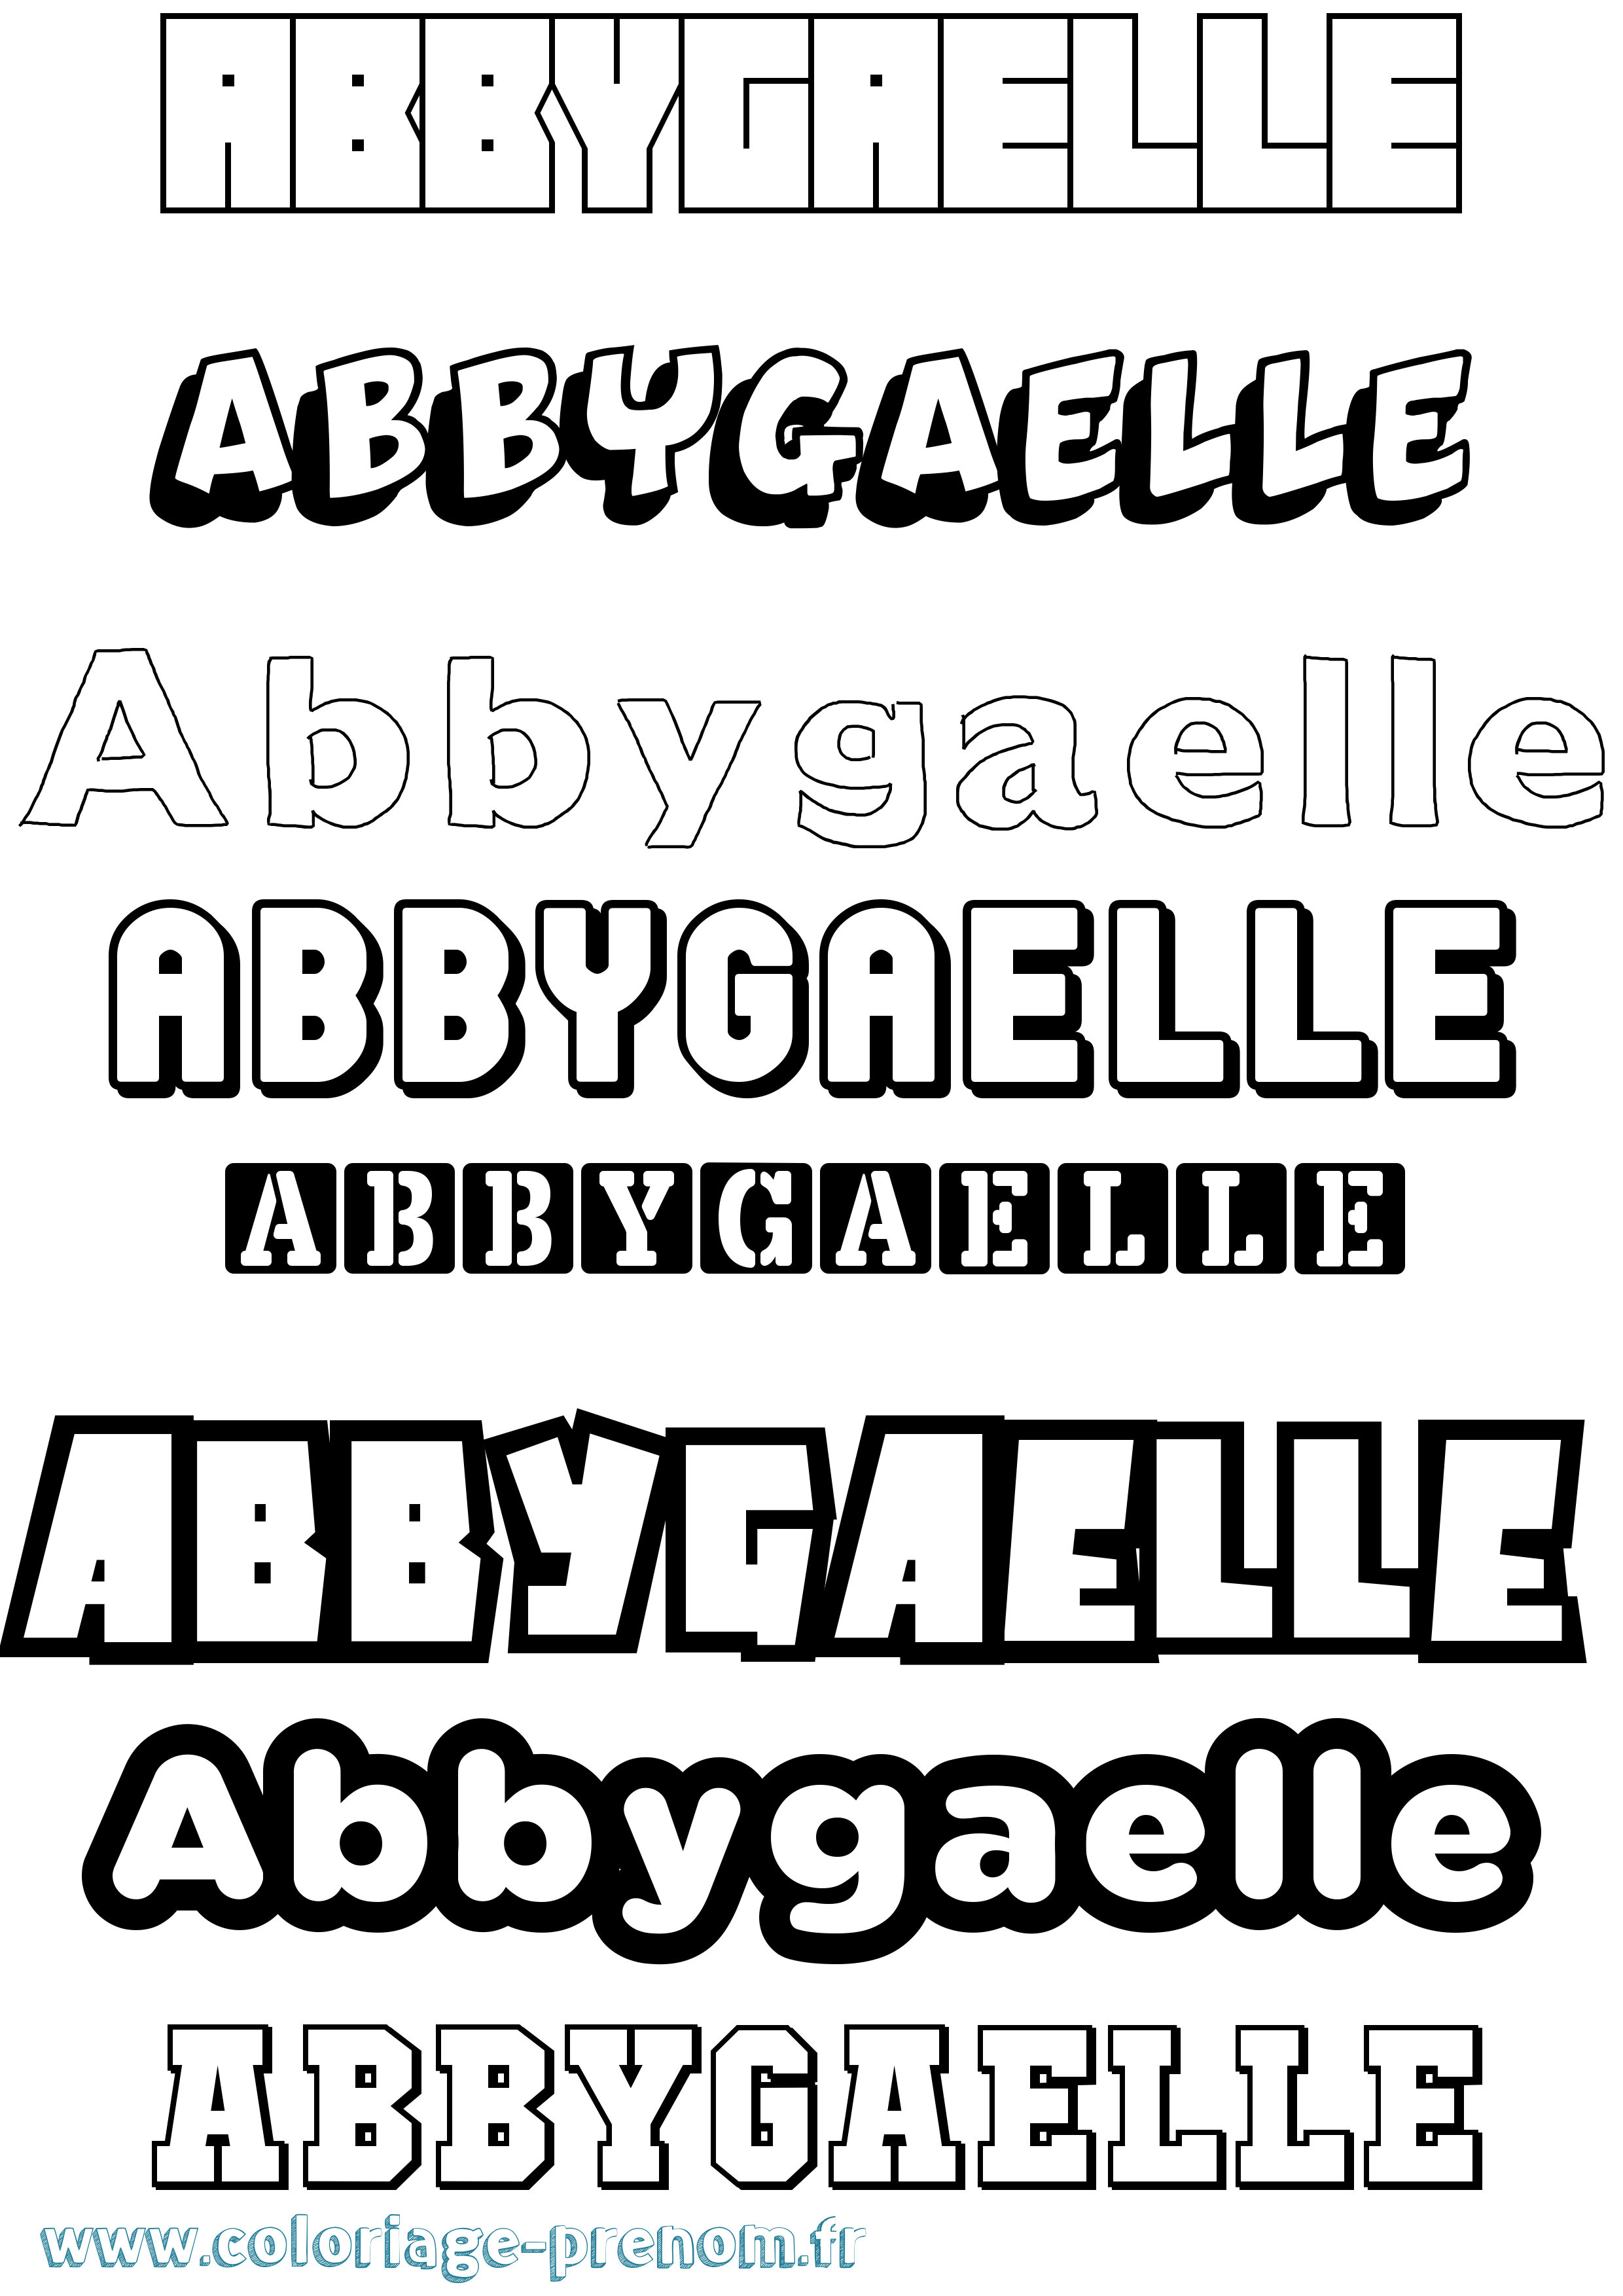 Coloriage prénom Abbygaelle Simple